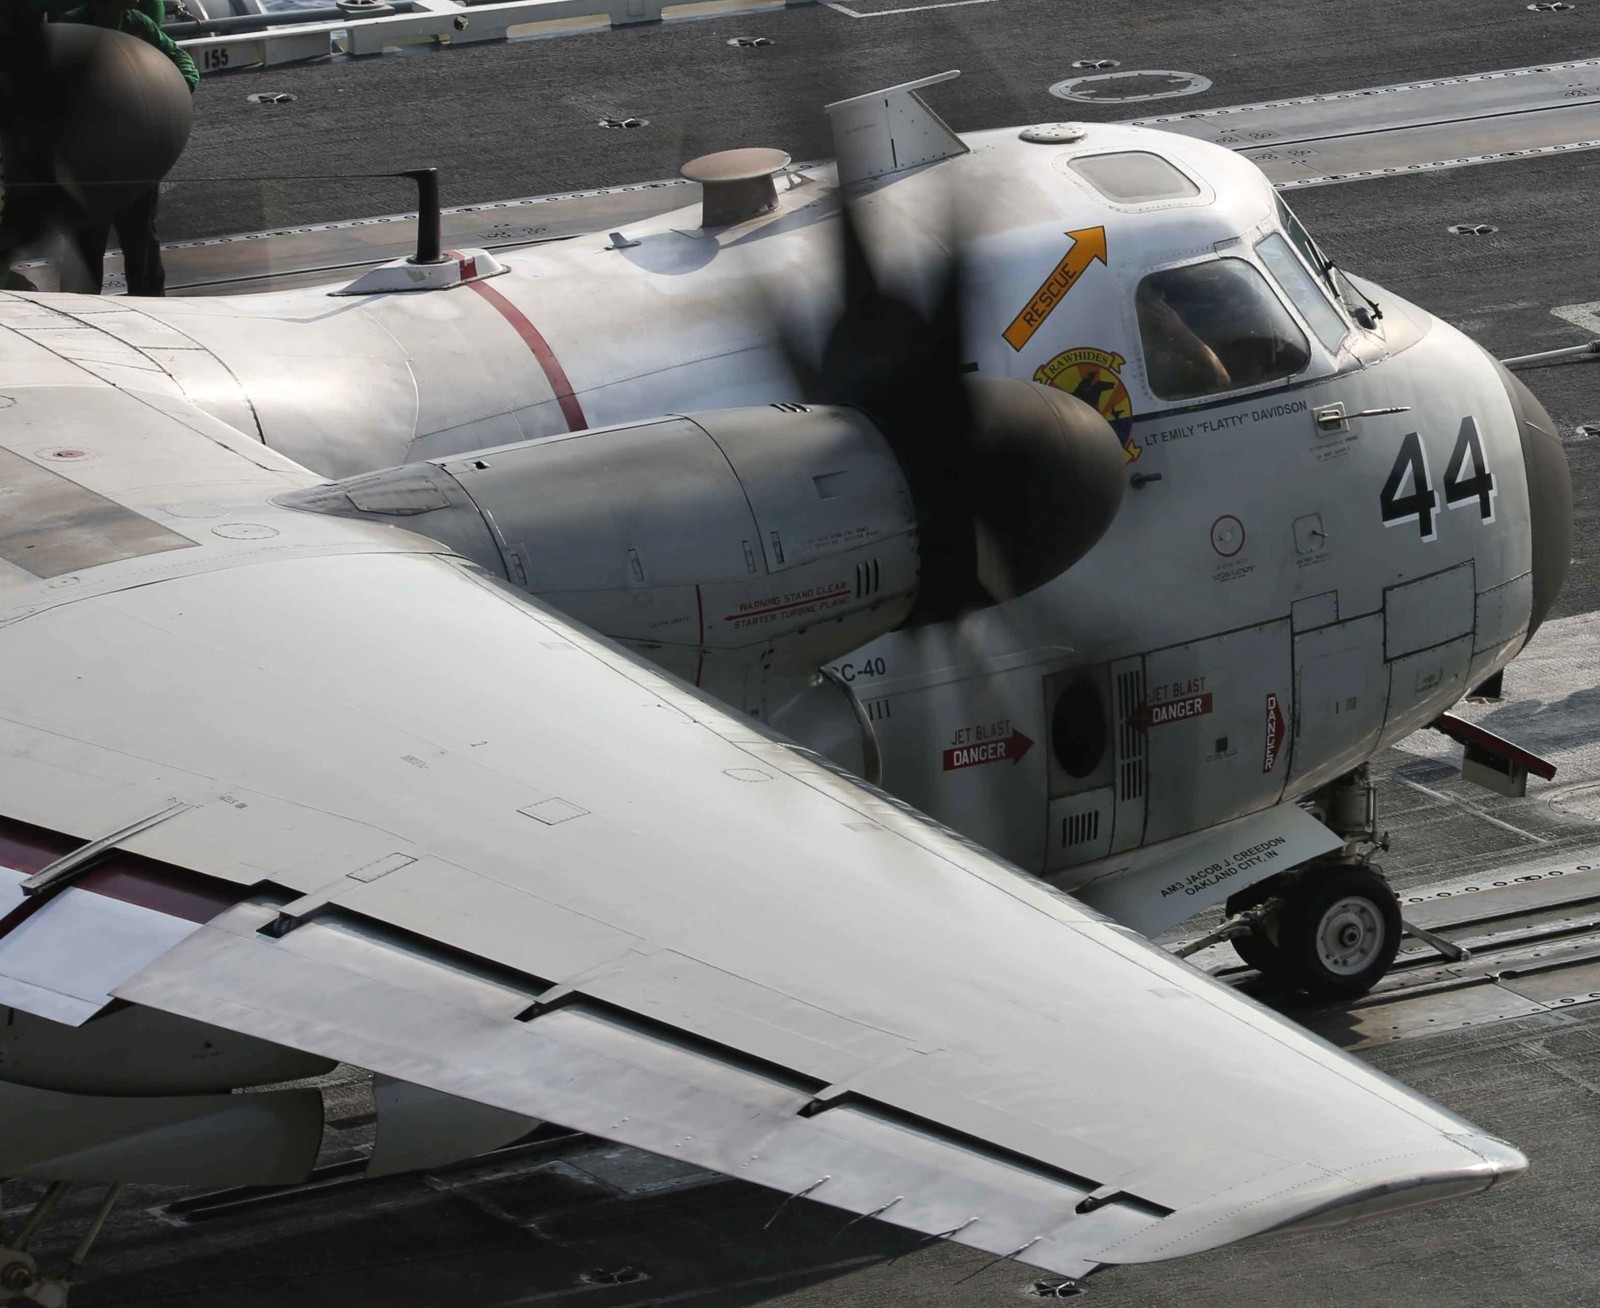 vrc-40 rawhides fleet logistics support squadron flelogsupron us navy grumman c-2a greyhound uss abraham lincoln cvn-72 59